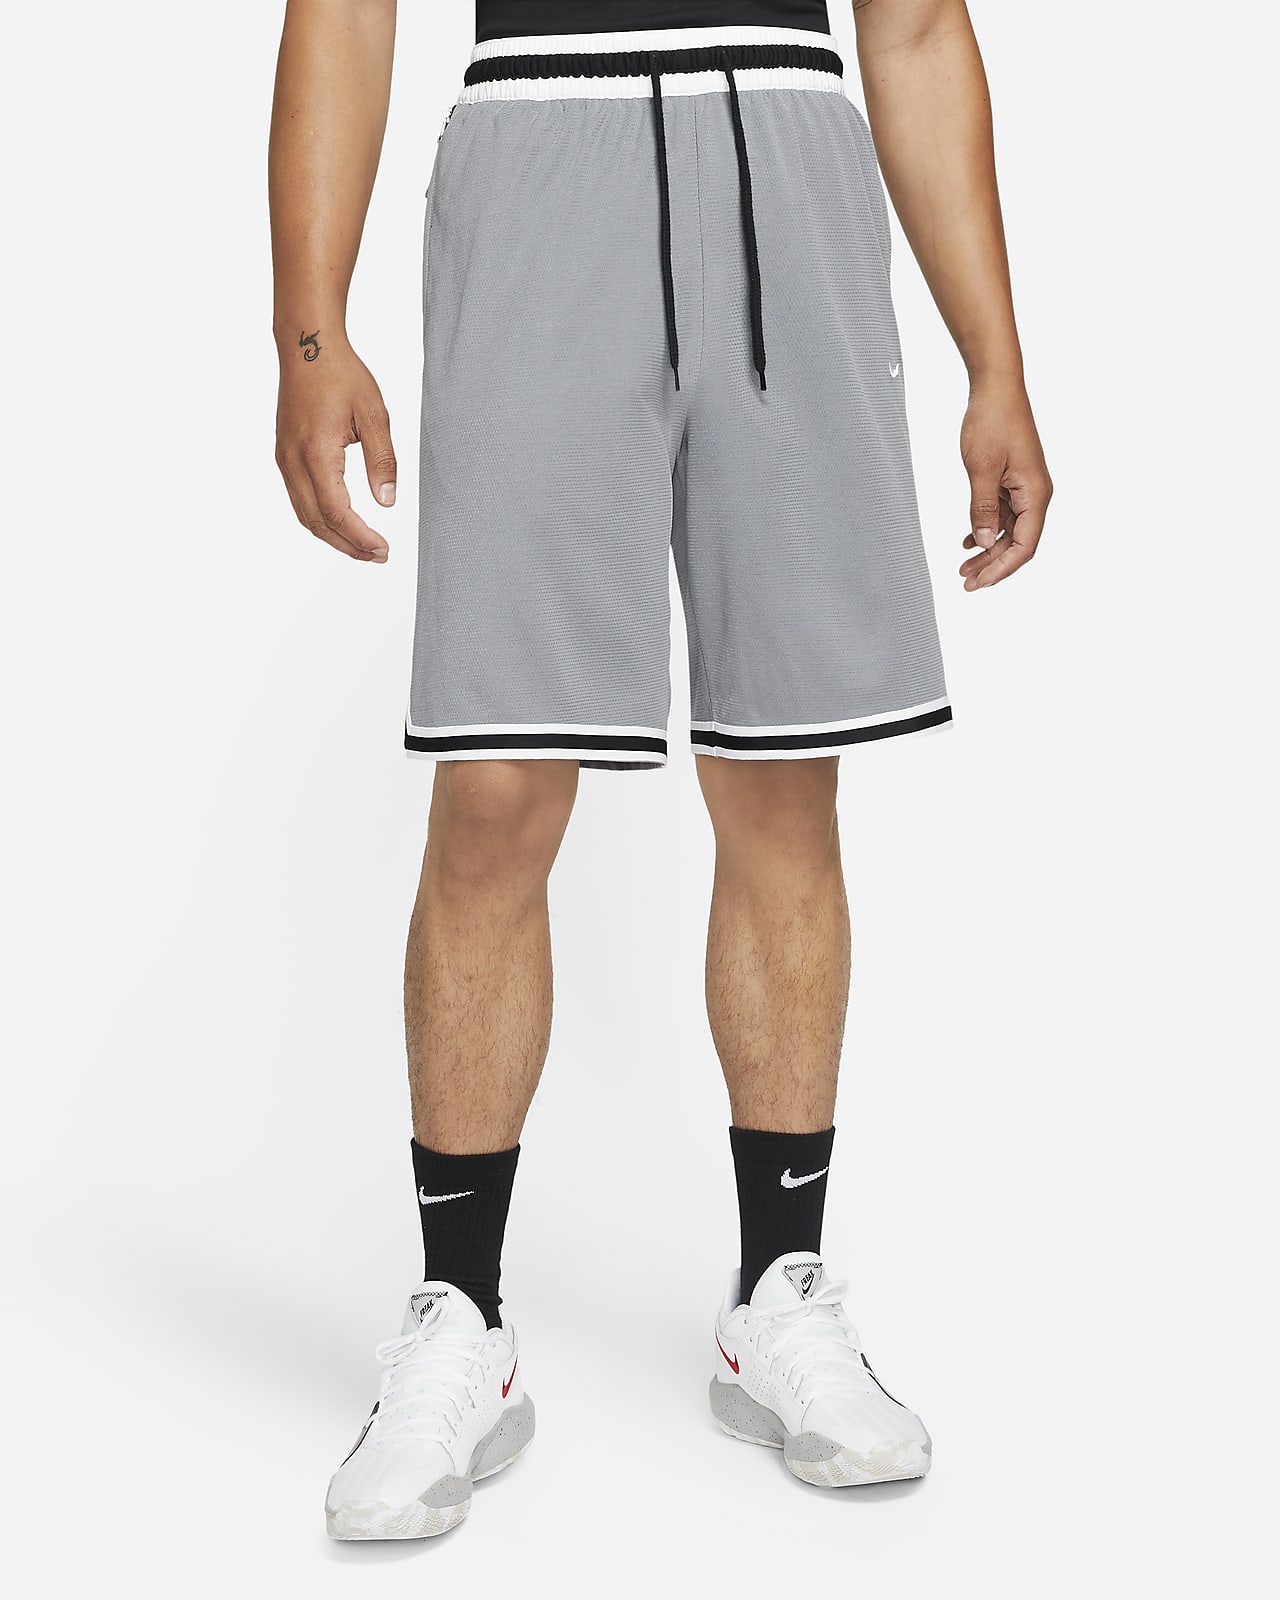 Nike Dri-FIT DNA Men's Shorts.